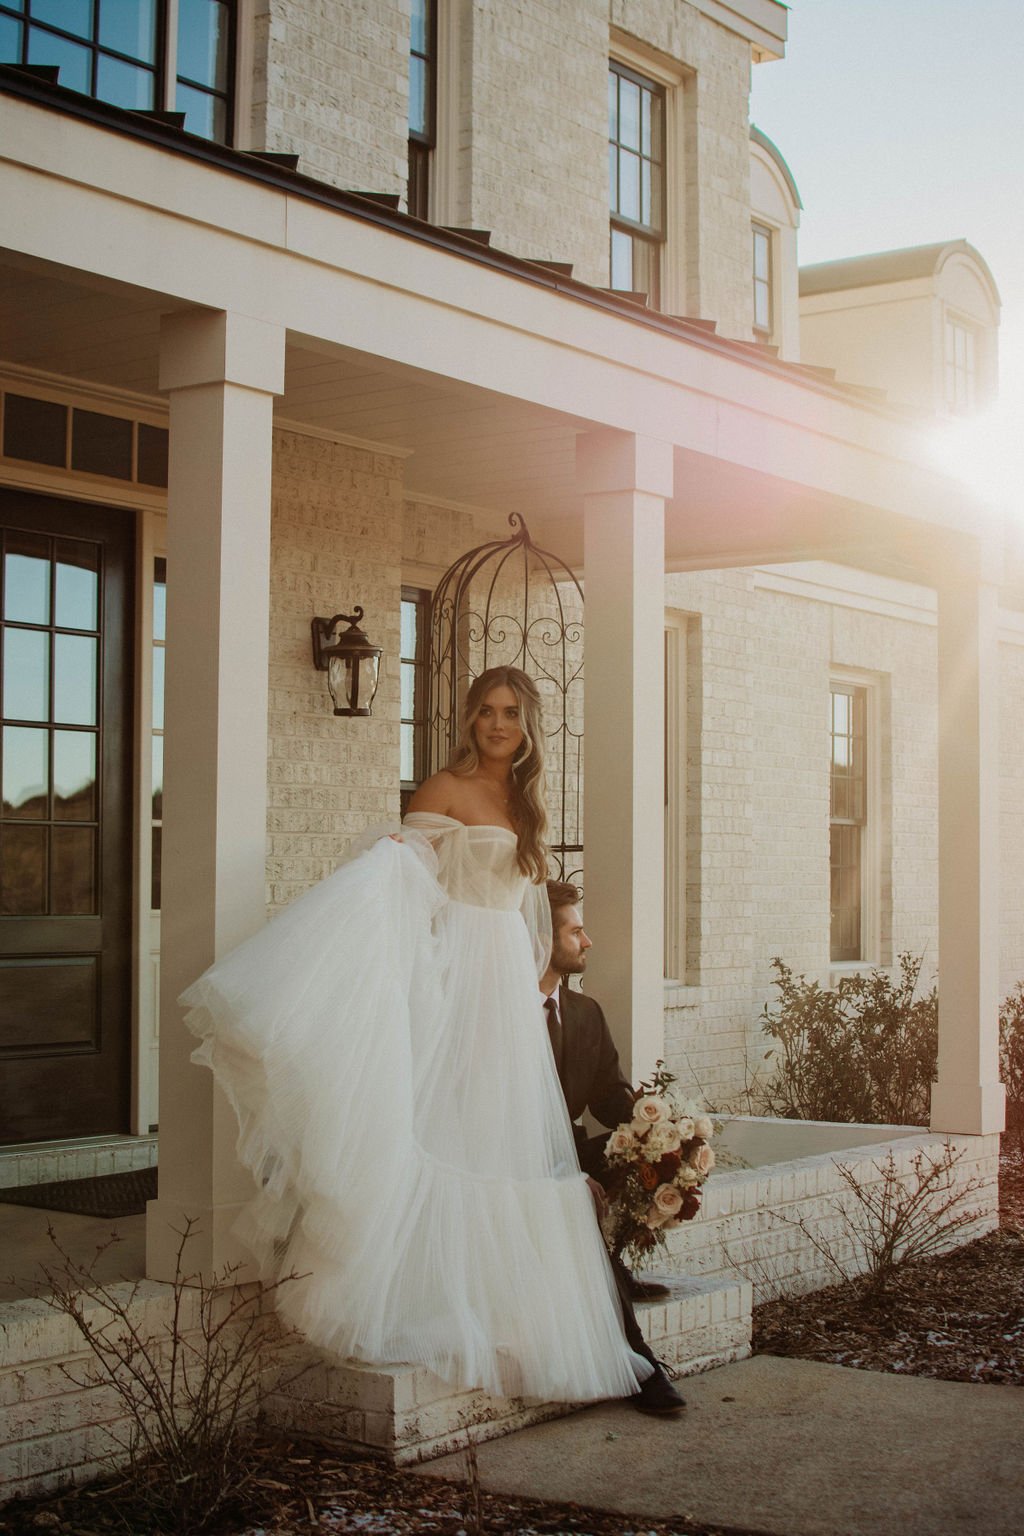 Alean-Leena-Armeria-Wedding-Dress-The-Meadows-Raleigh-03.jpg